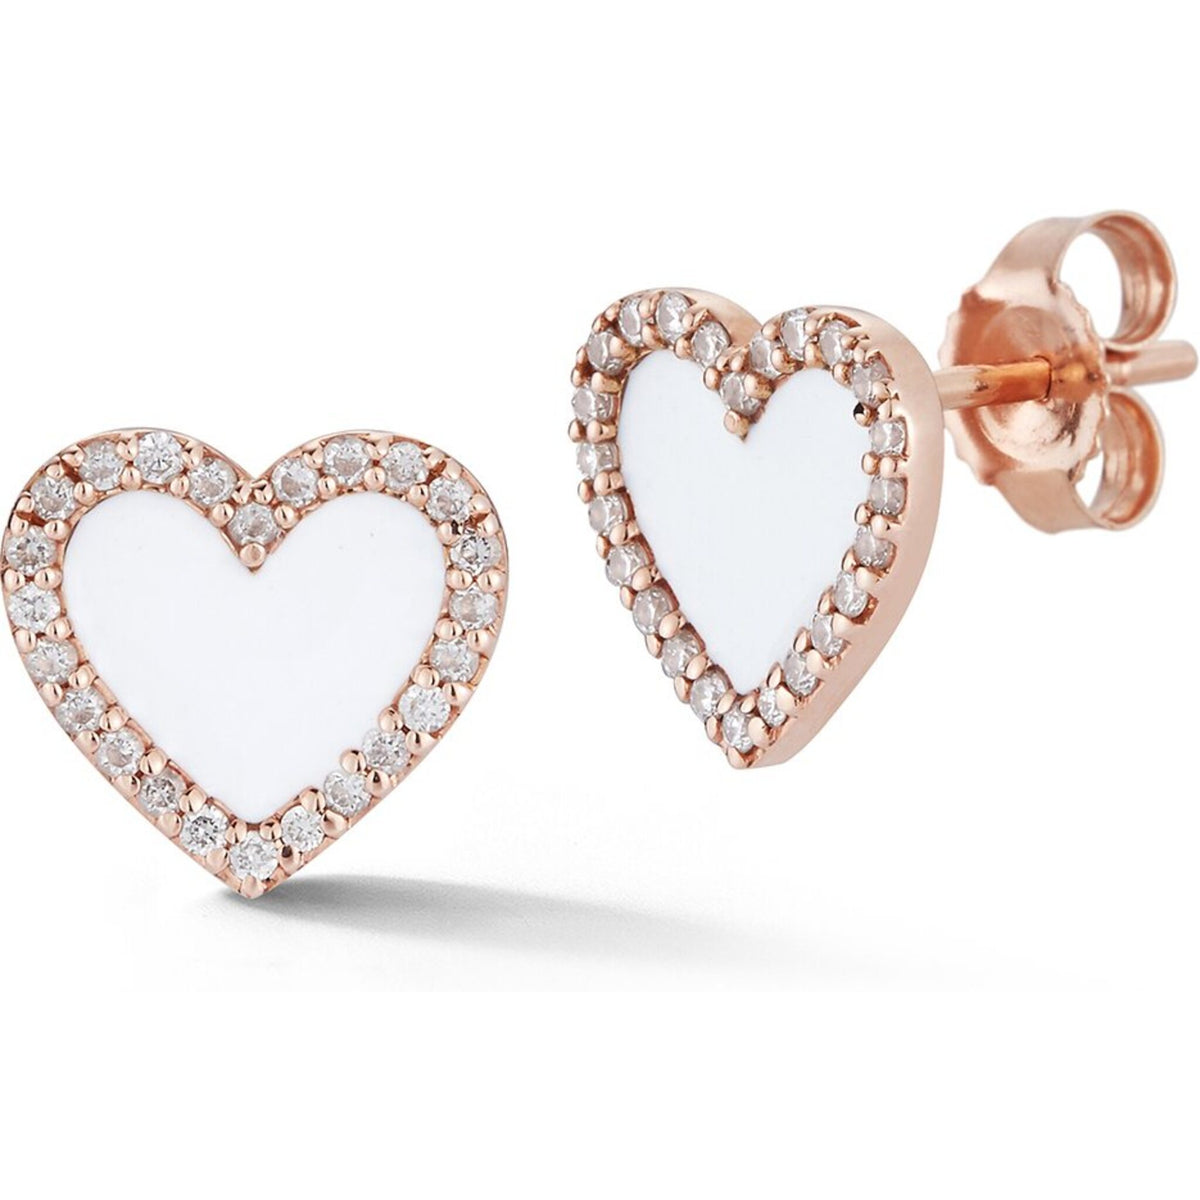 Sofer Jewelry - White Enamel Heart Stud Earring With Diamond Border in 14K Rose Gold